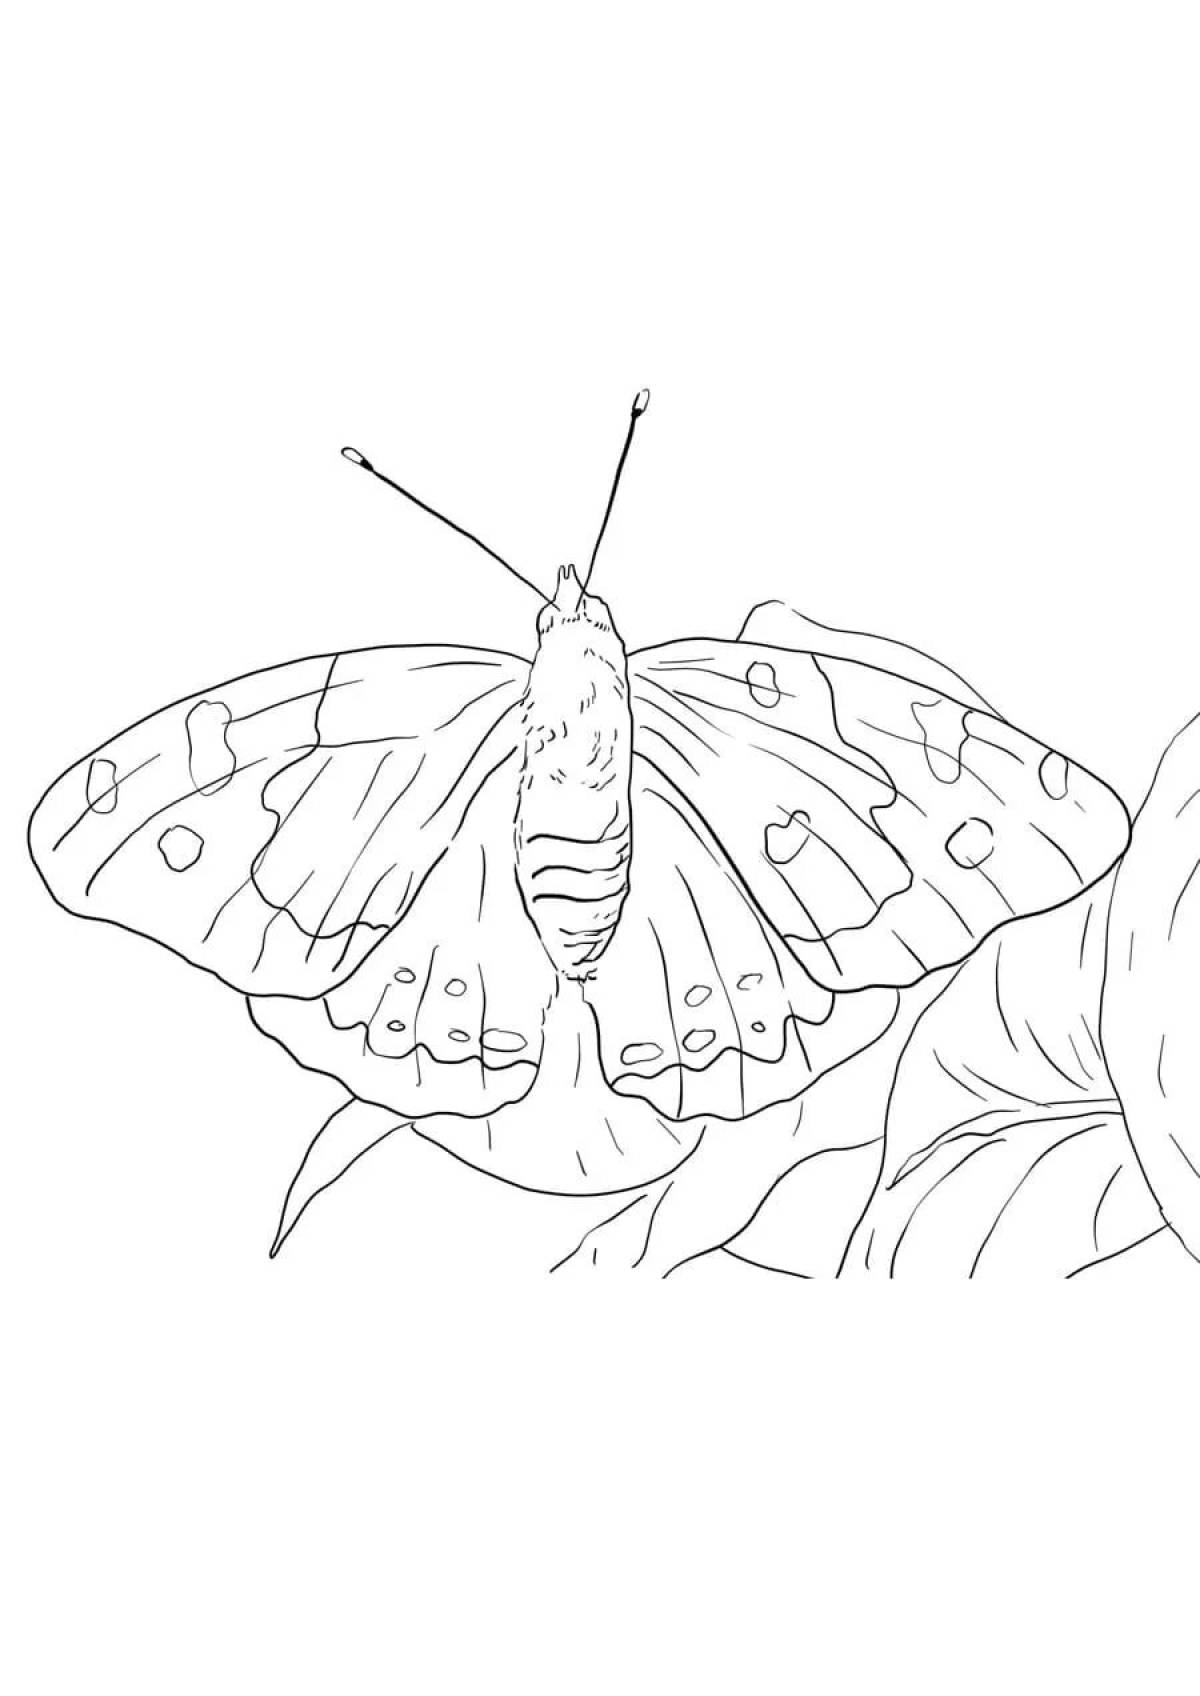 Apollo butterfly #6